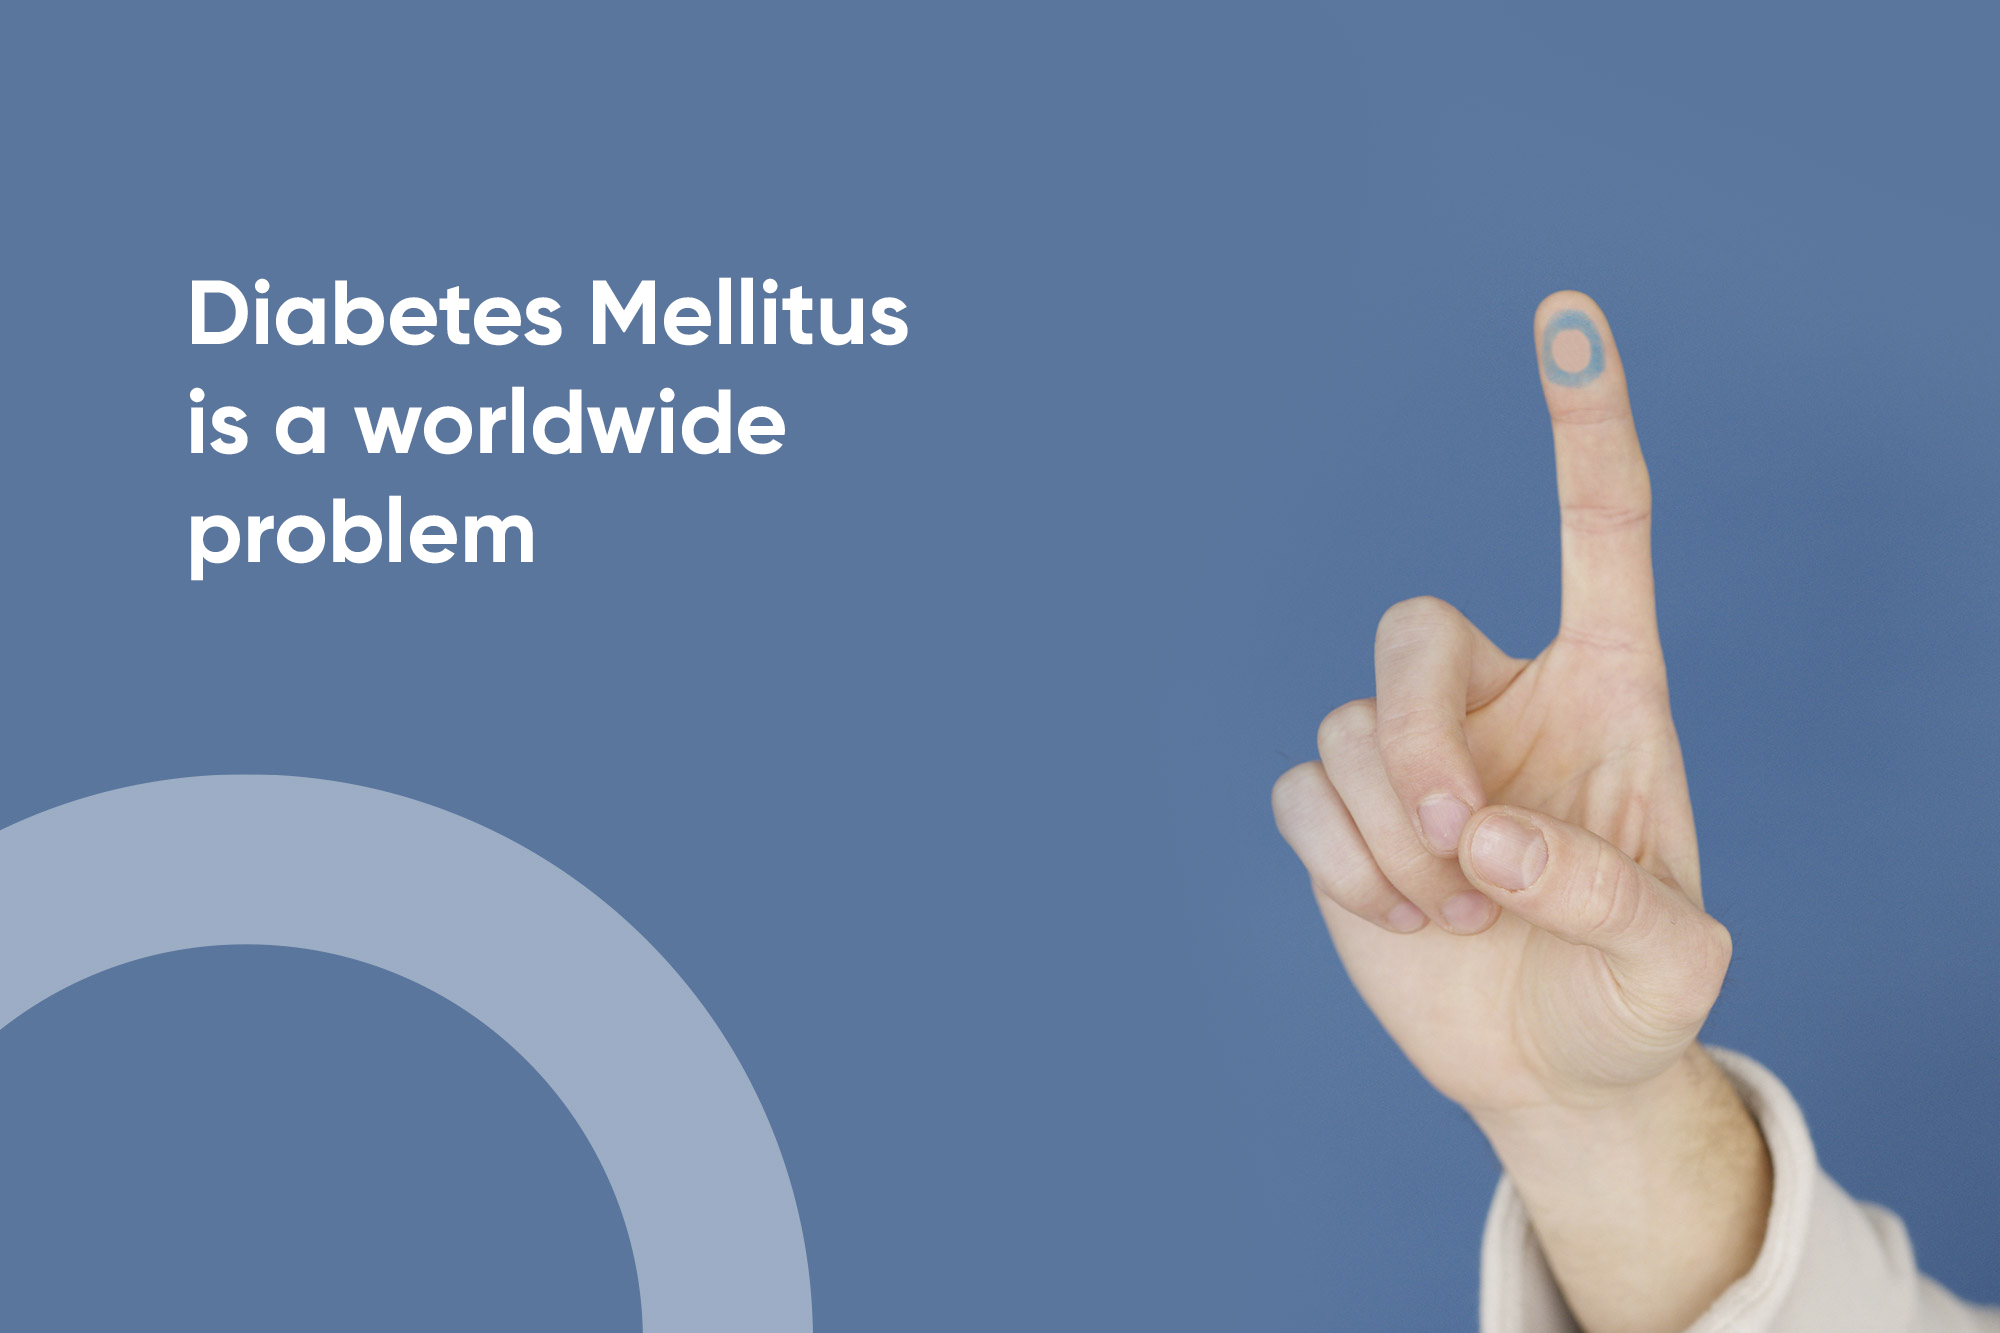 November 14 is World Diabetes Day